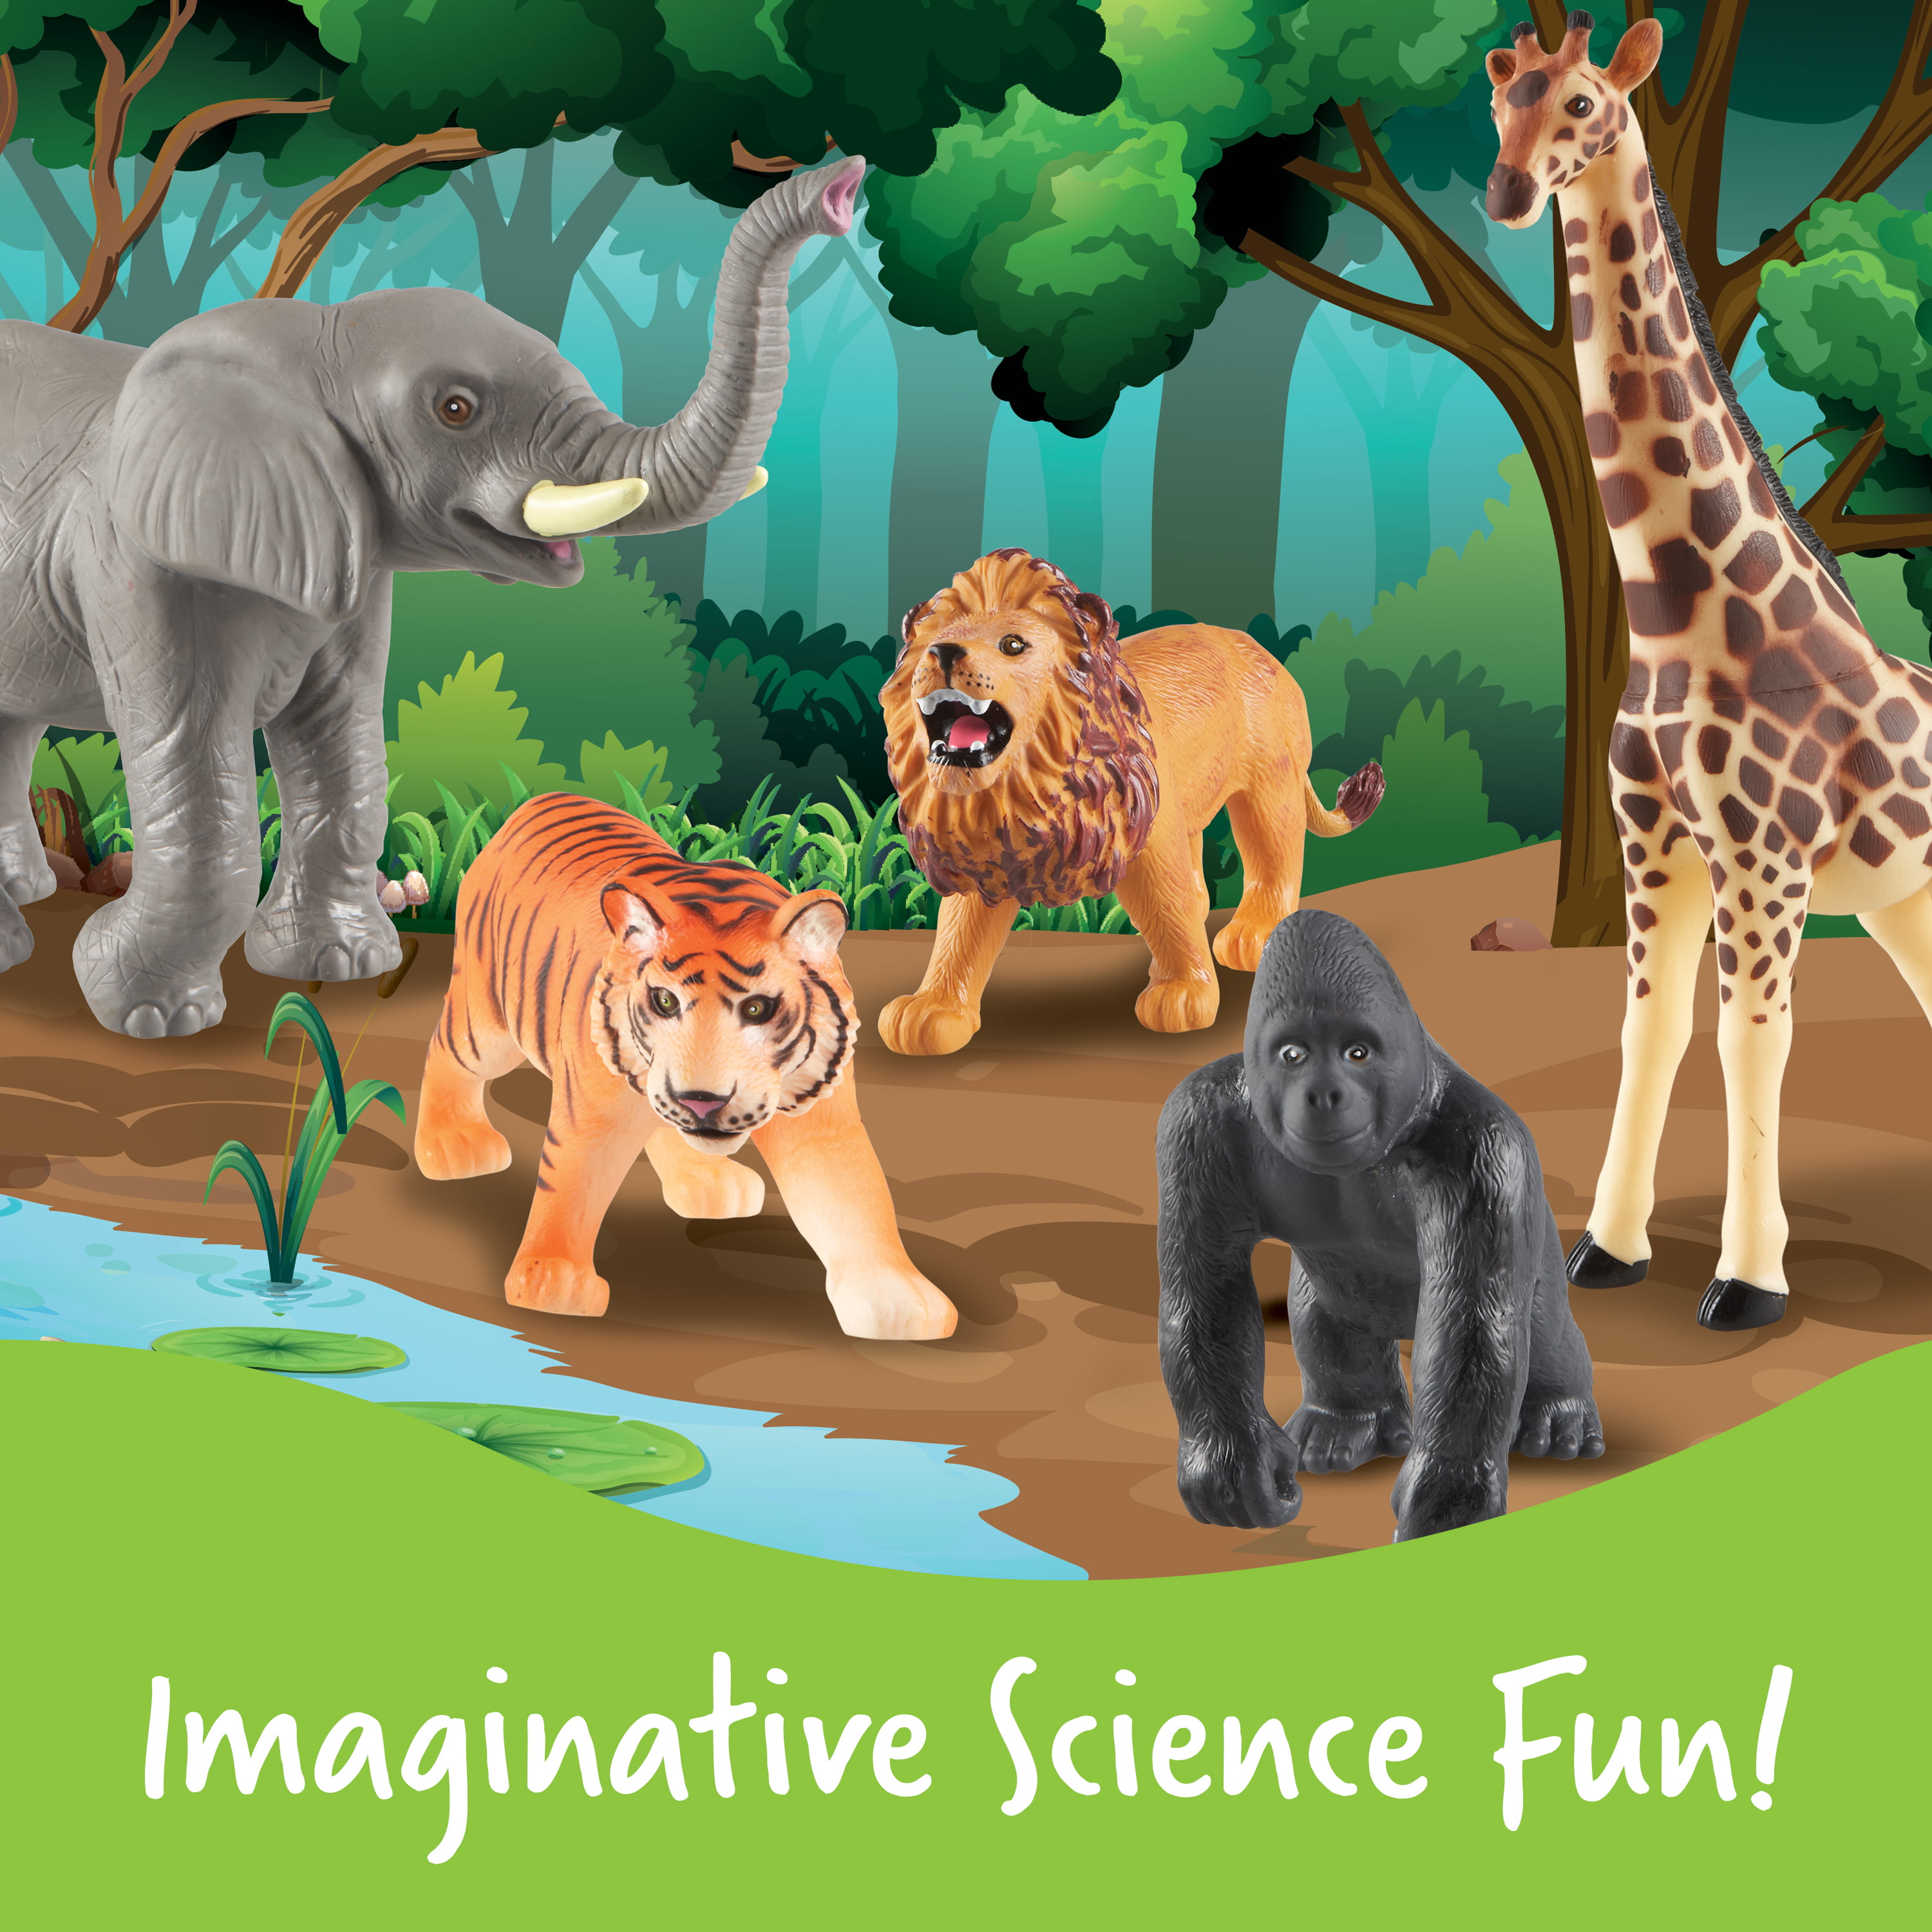 Learning Resources Jumbo Jungle Animals LER0693